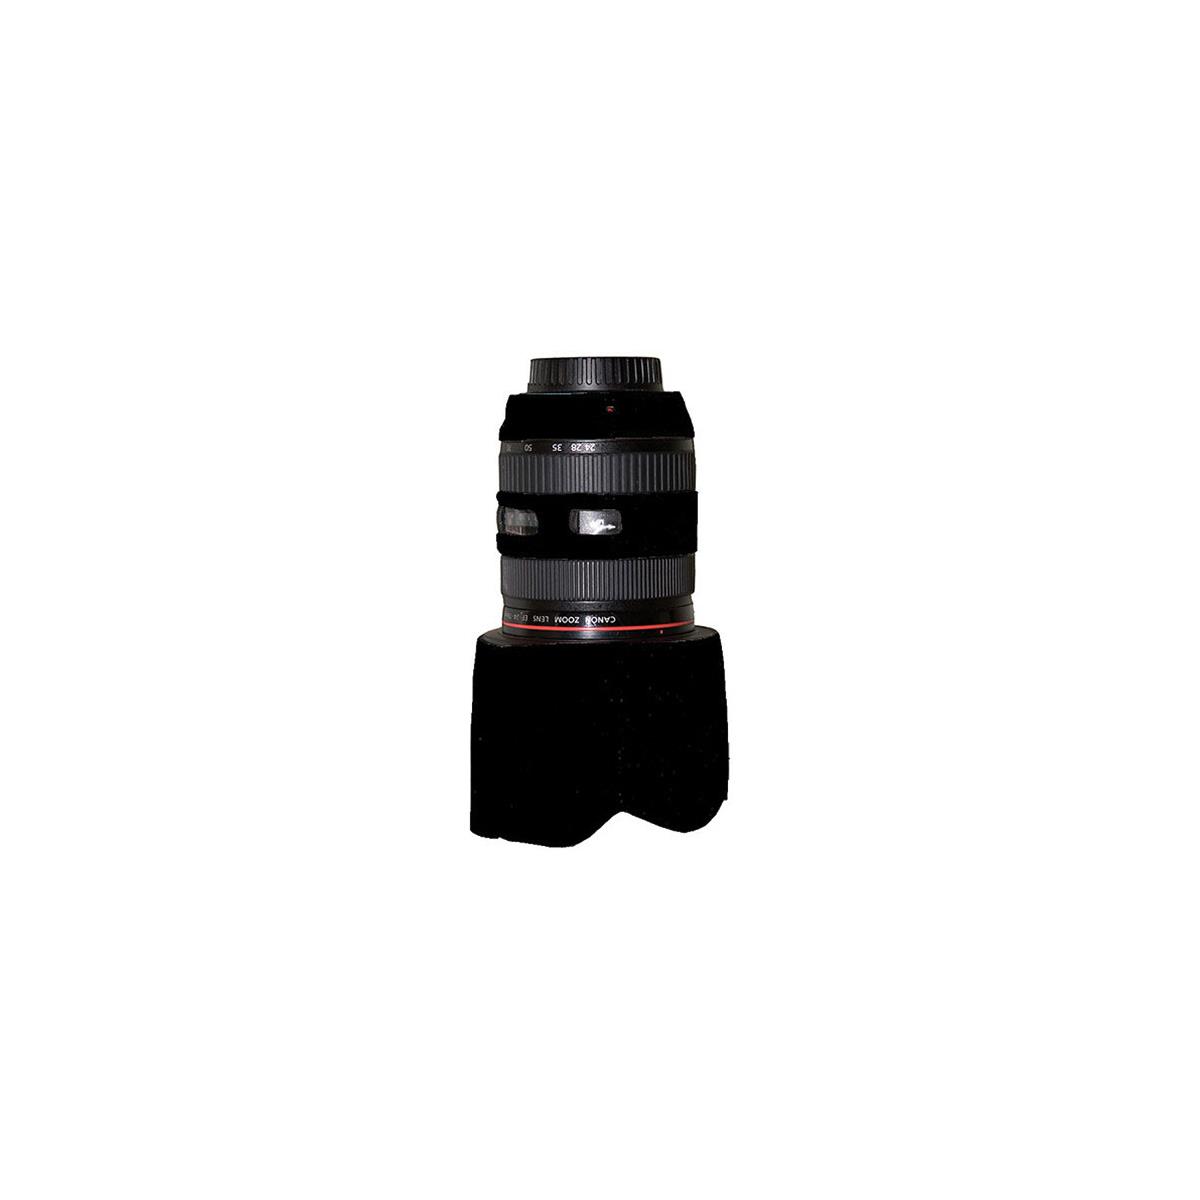 Image of LensCoat LC2470BK Lens Cover for Canon 24-70mm Lens